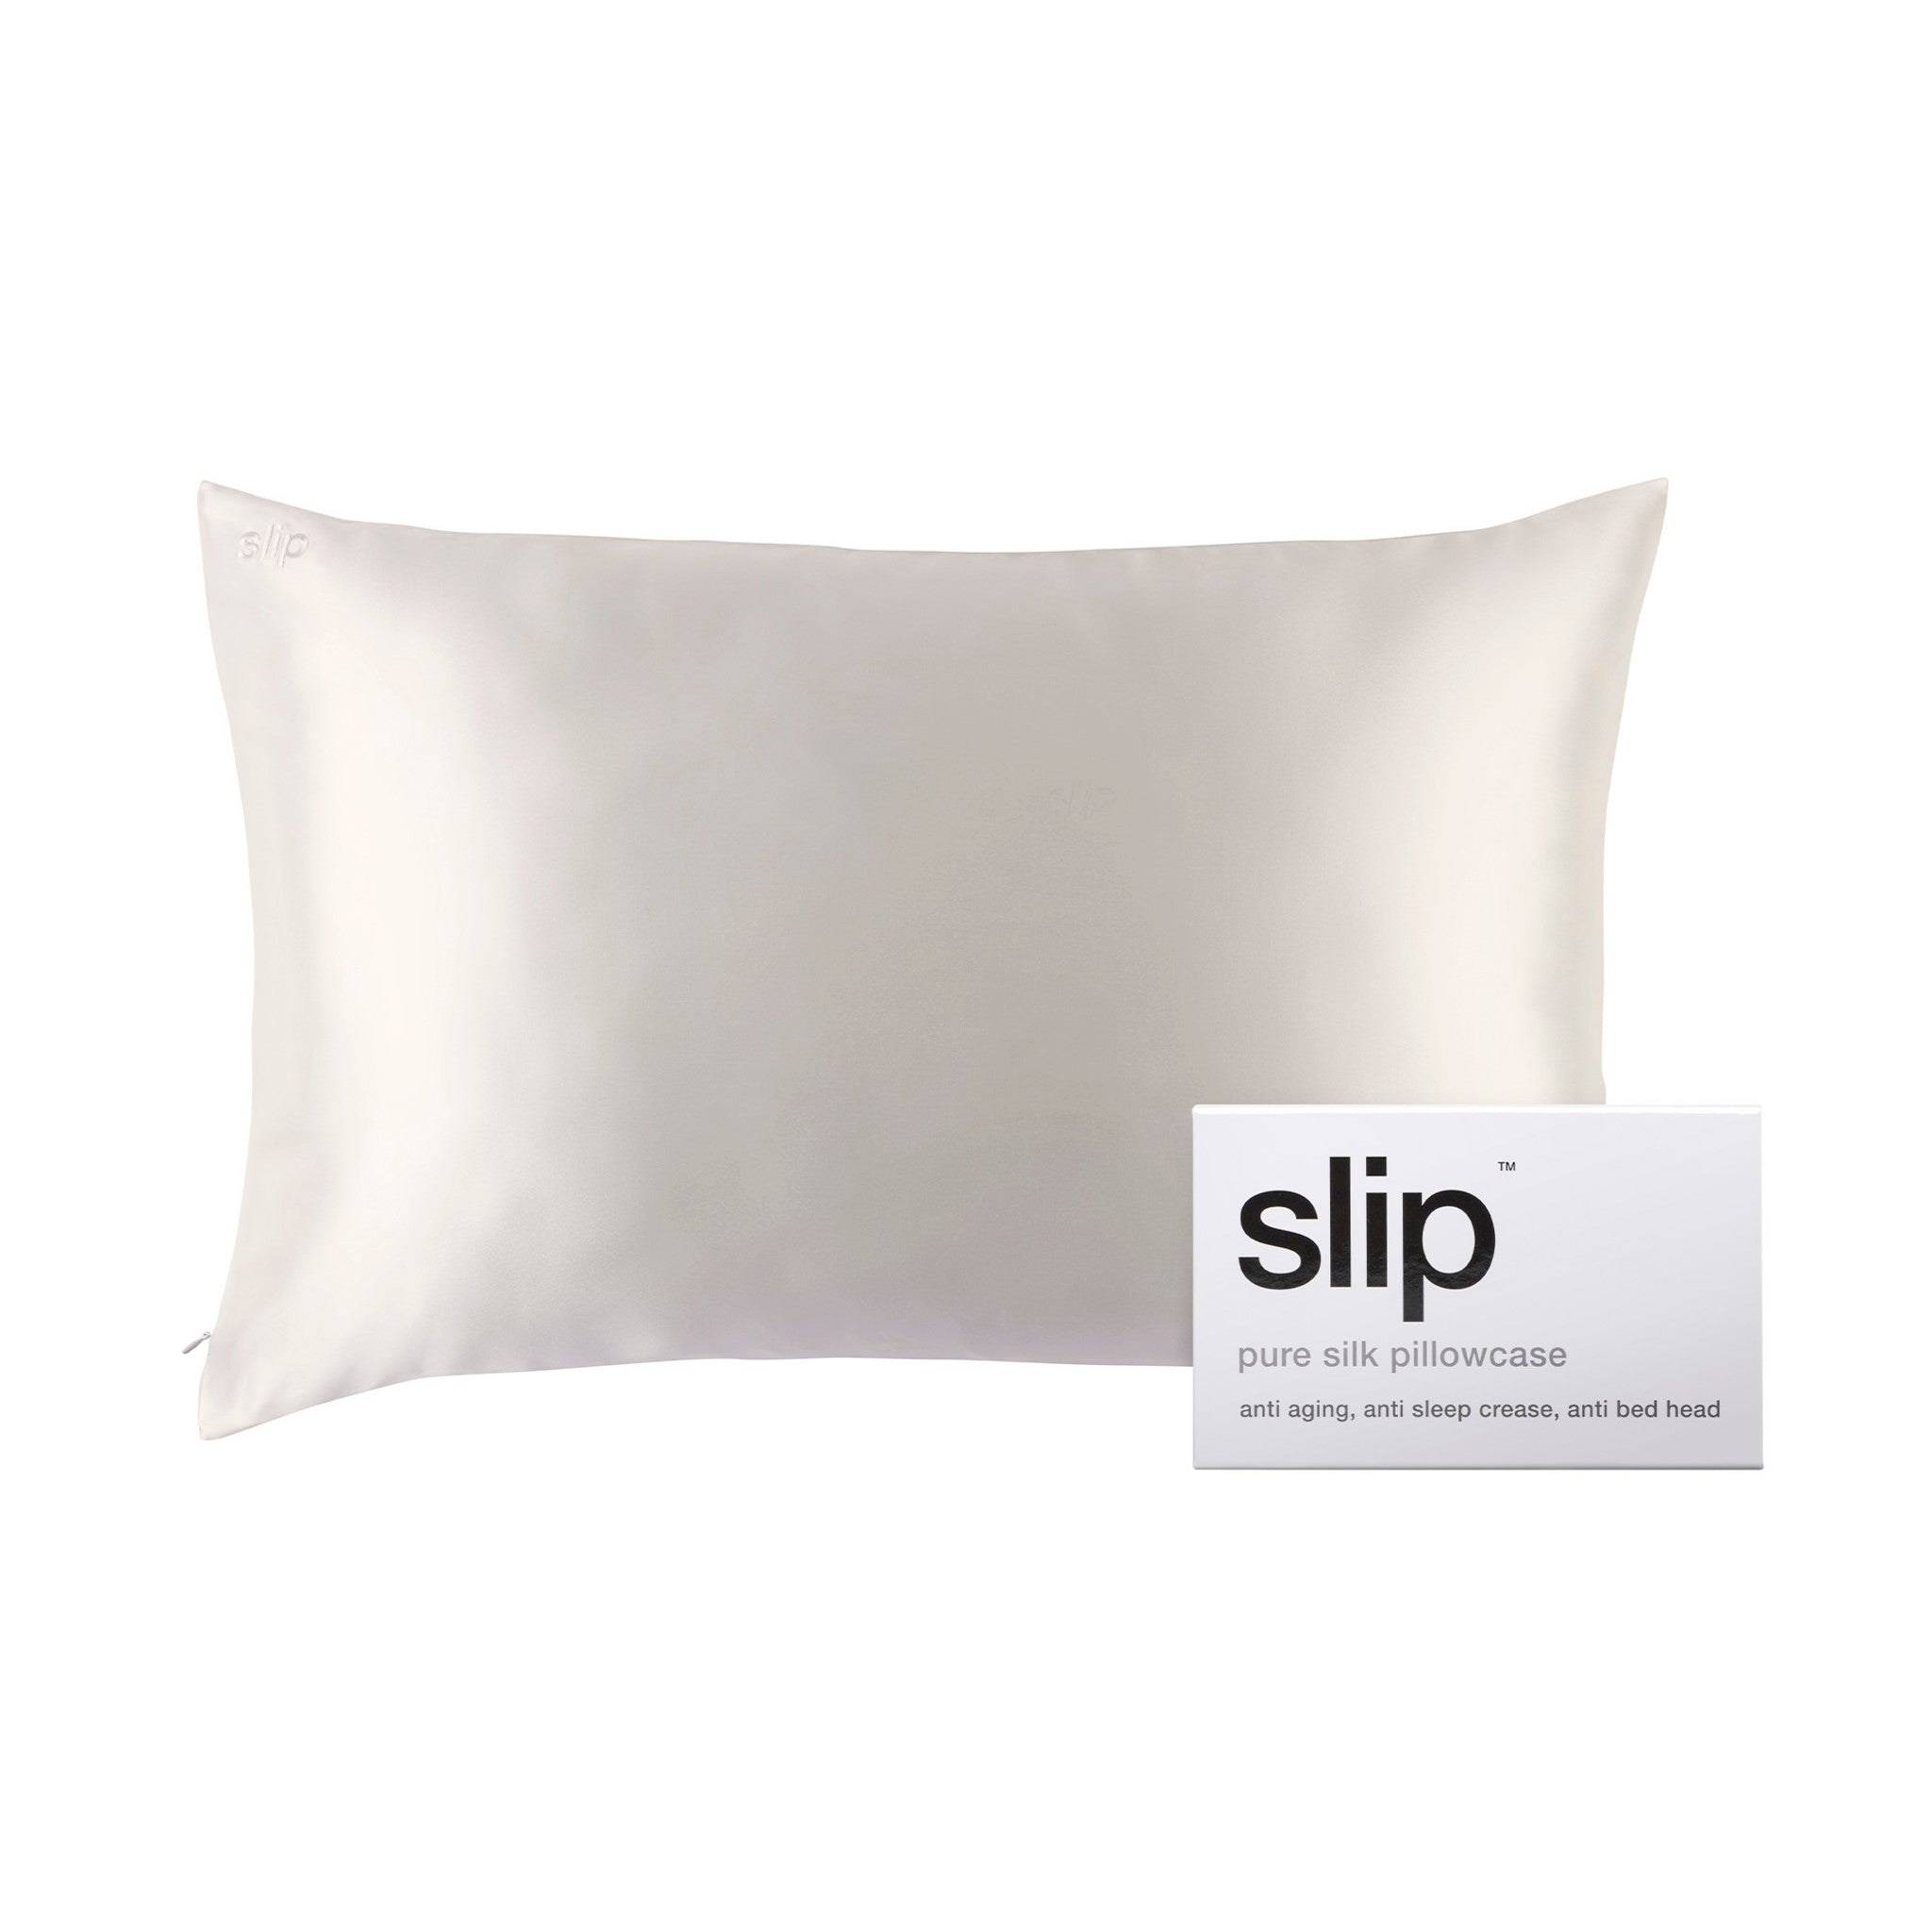 Slip Pure Silk Queen Pillowcase Color/Shade variant: White main image.